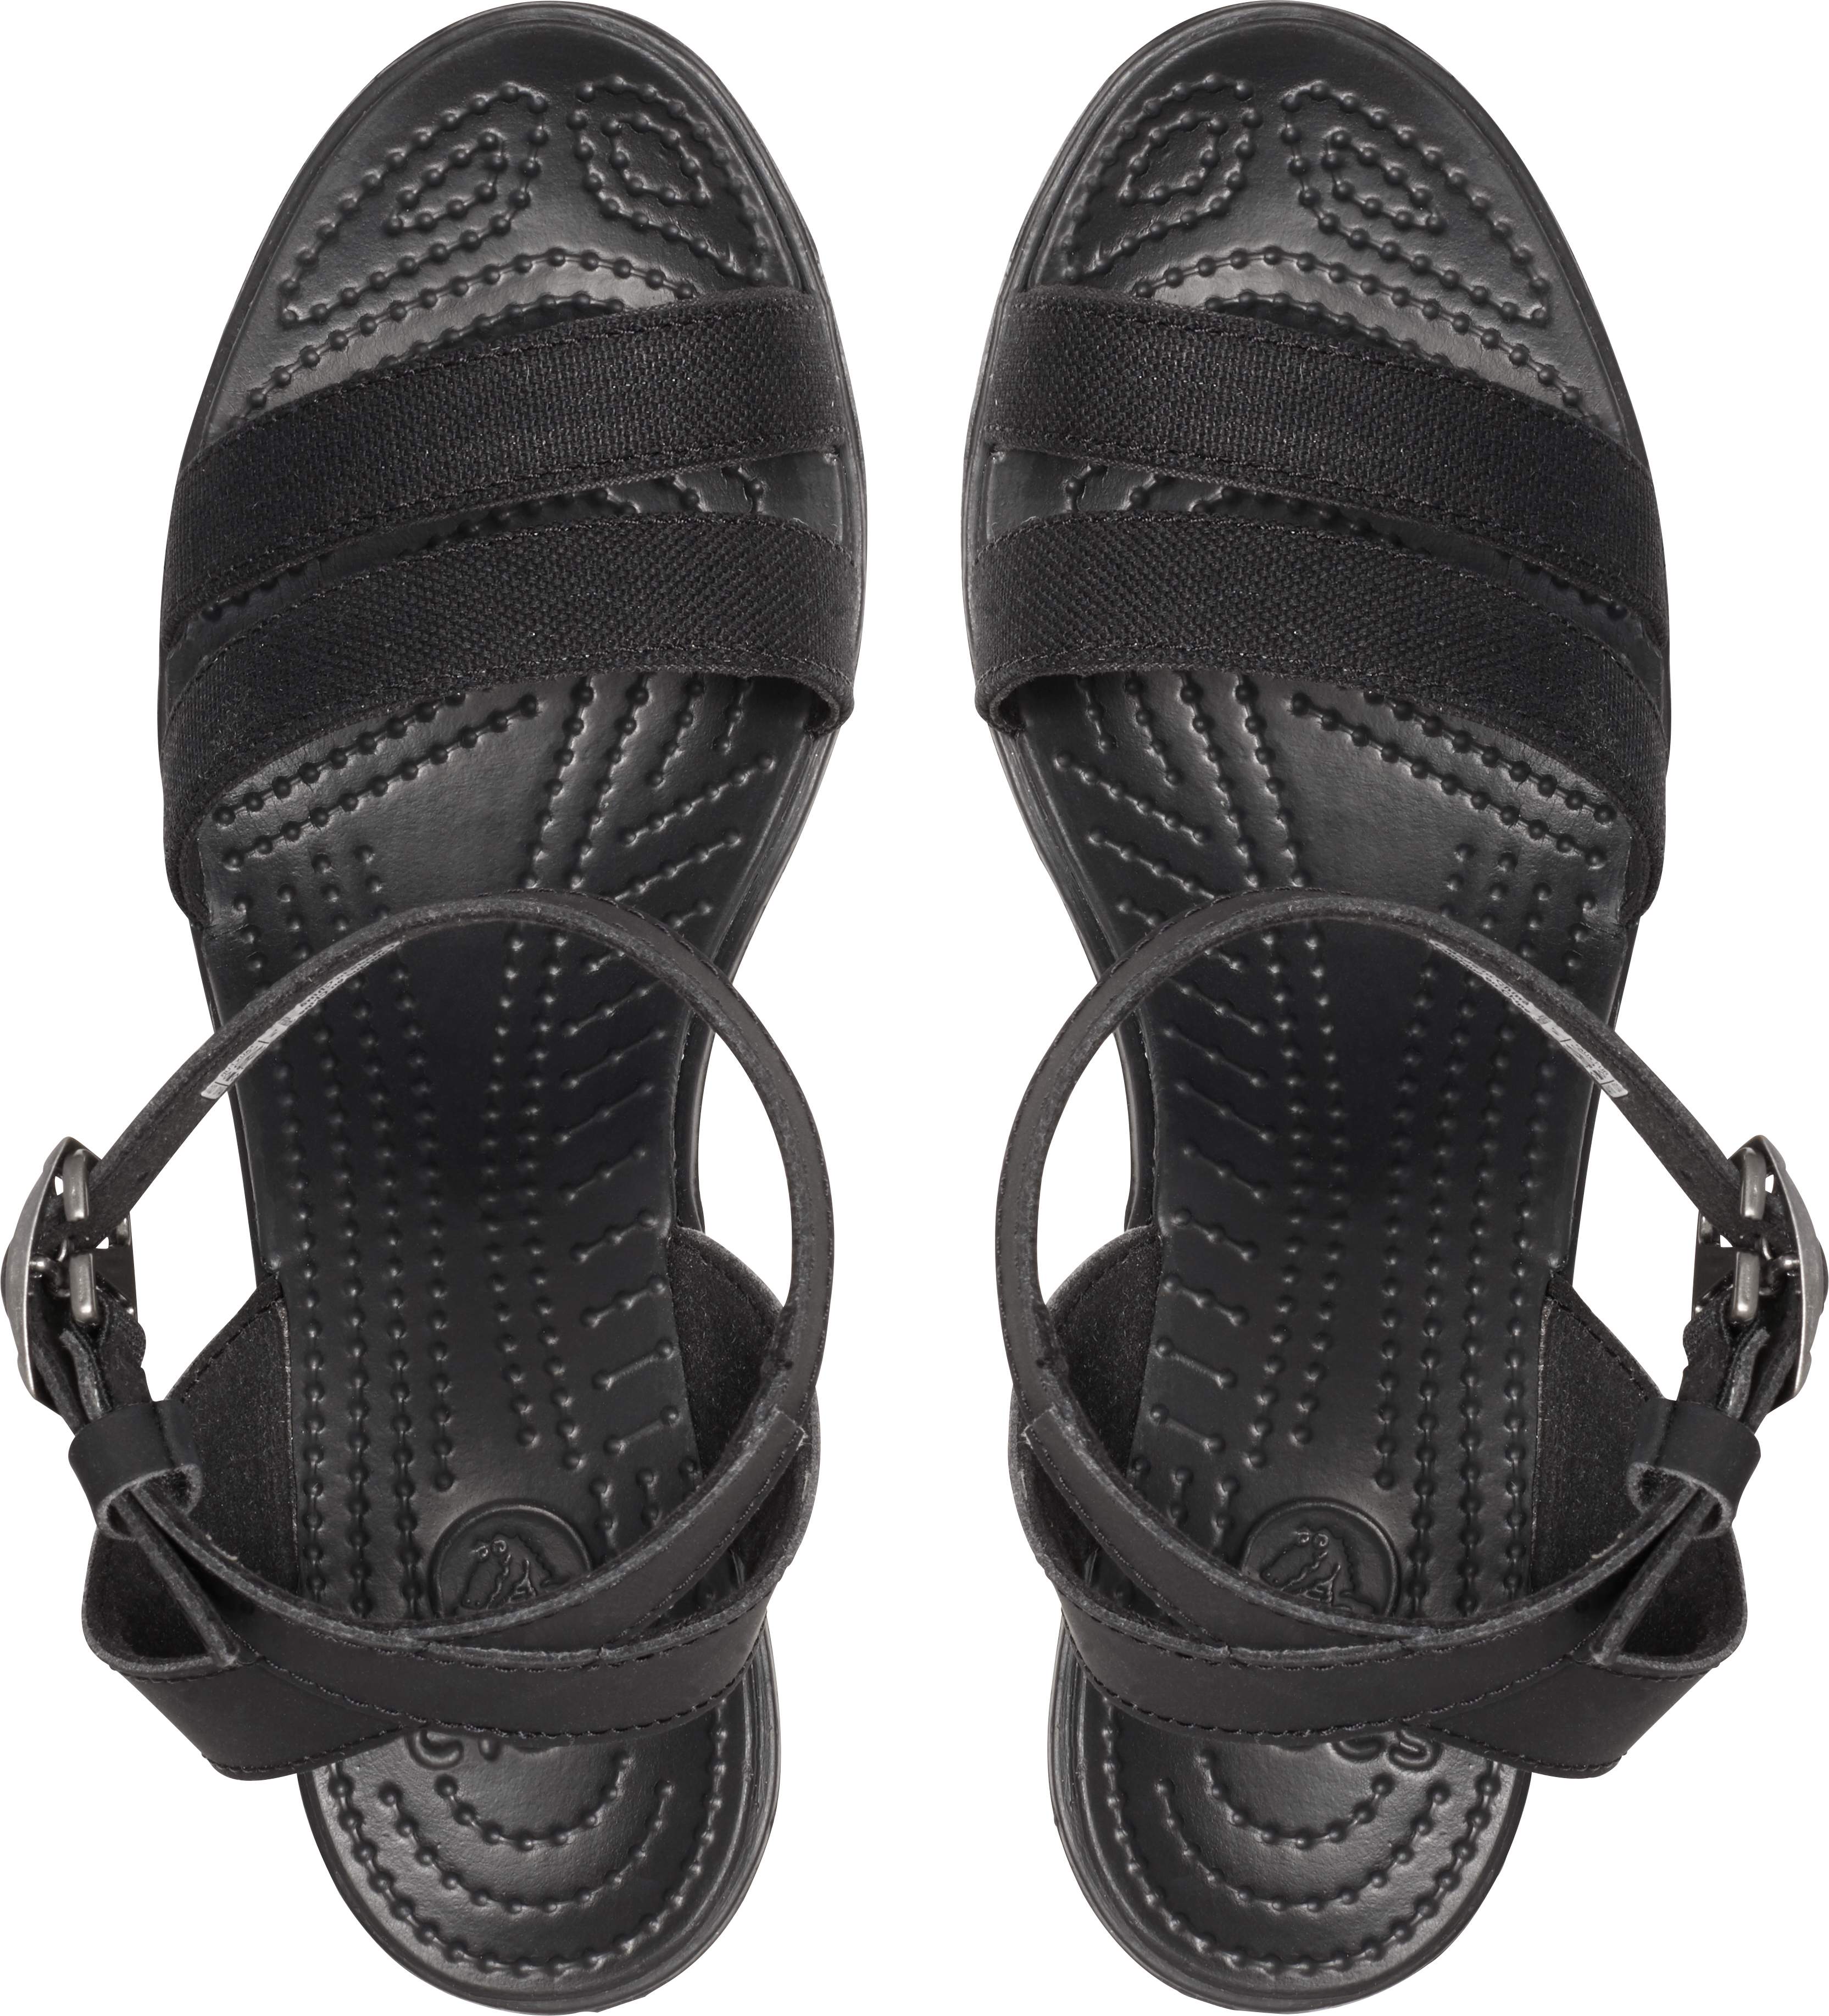 crocs leigh sandal wedge